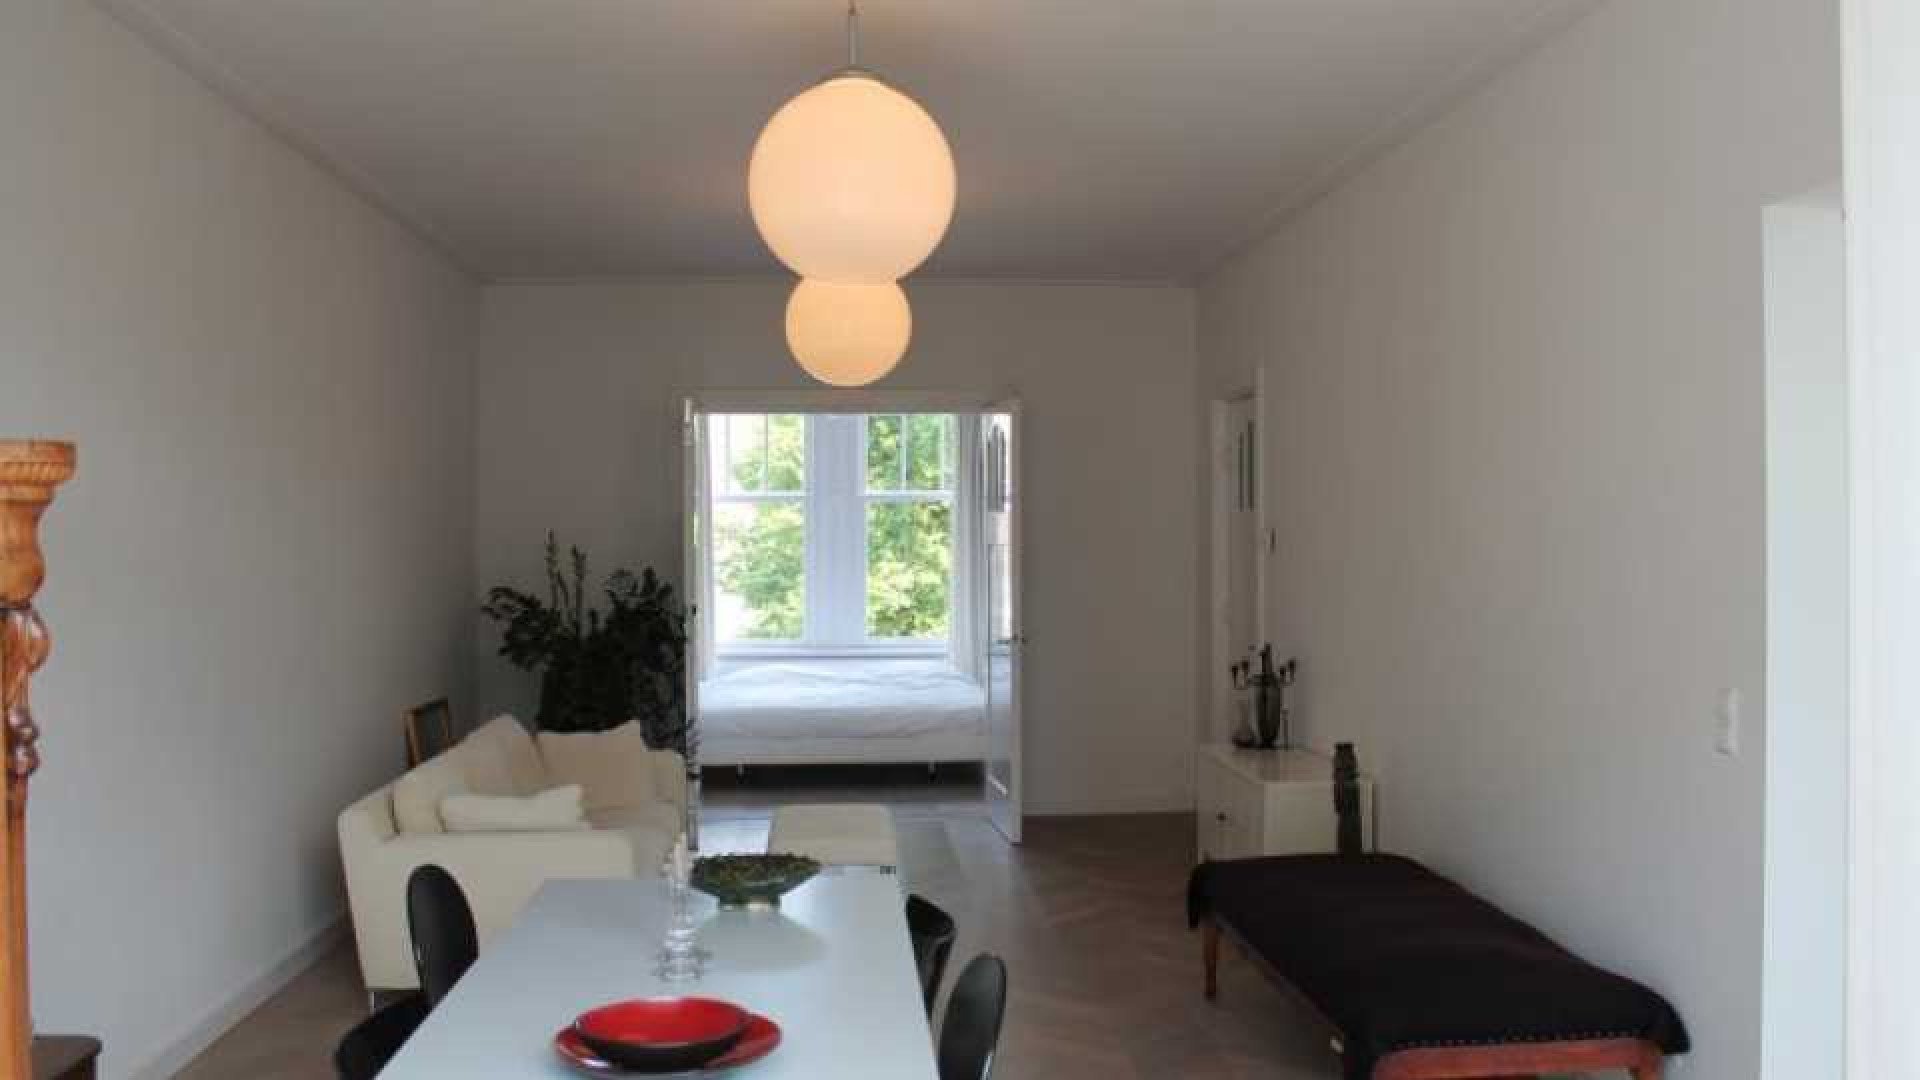 Dave Roelvink huurt appartement in Amsterdam Oud-Zuid. Zie foto's